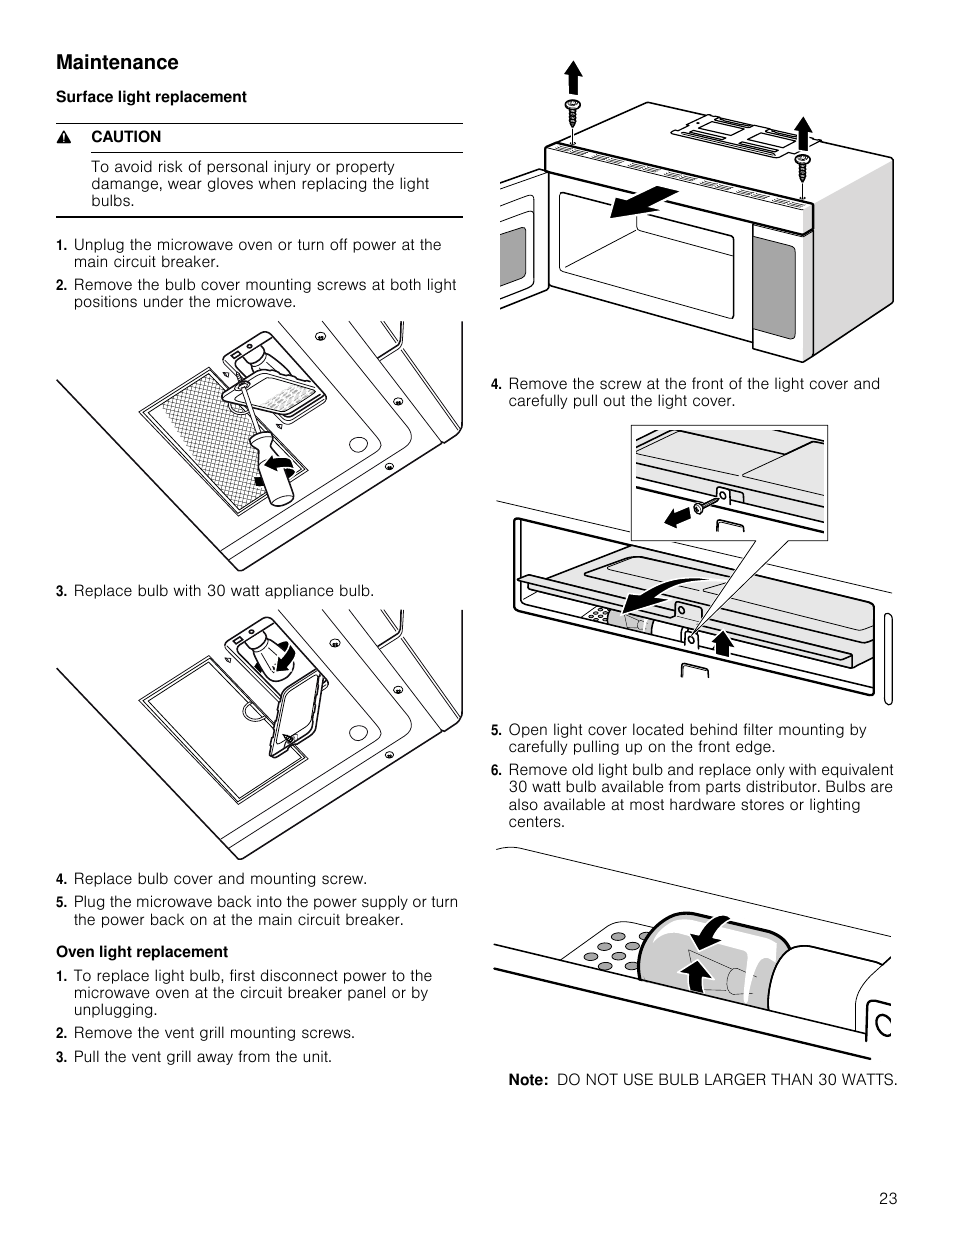 Maintenance, Surface light replacement, 9 caution | Bosch HMV8052U User  Manual | Page 23 / 60